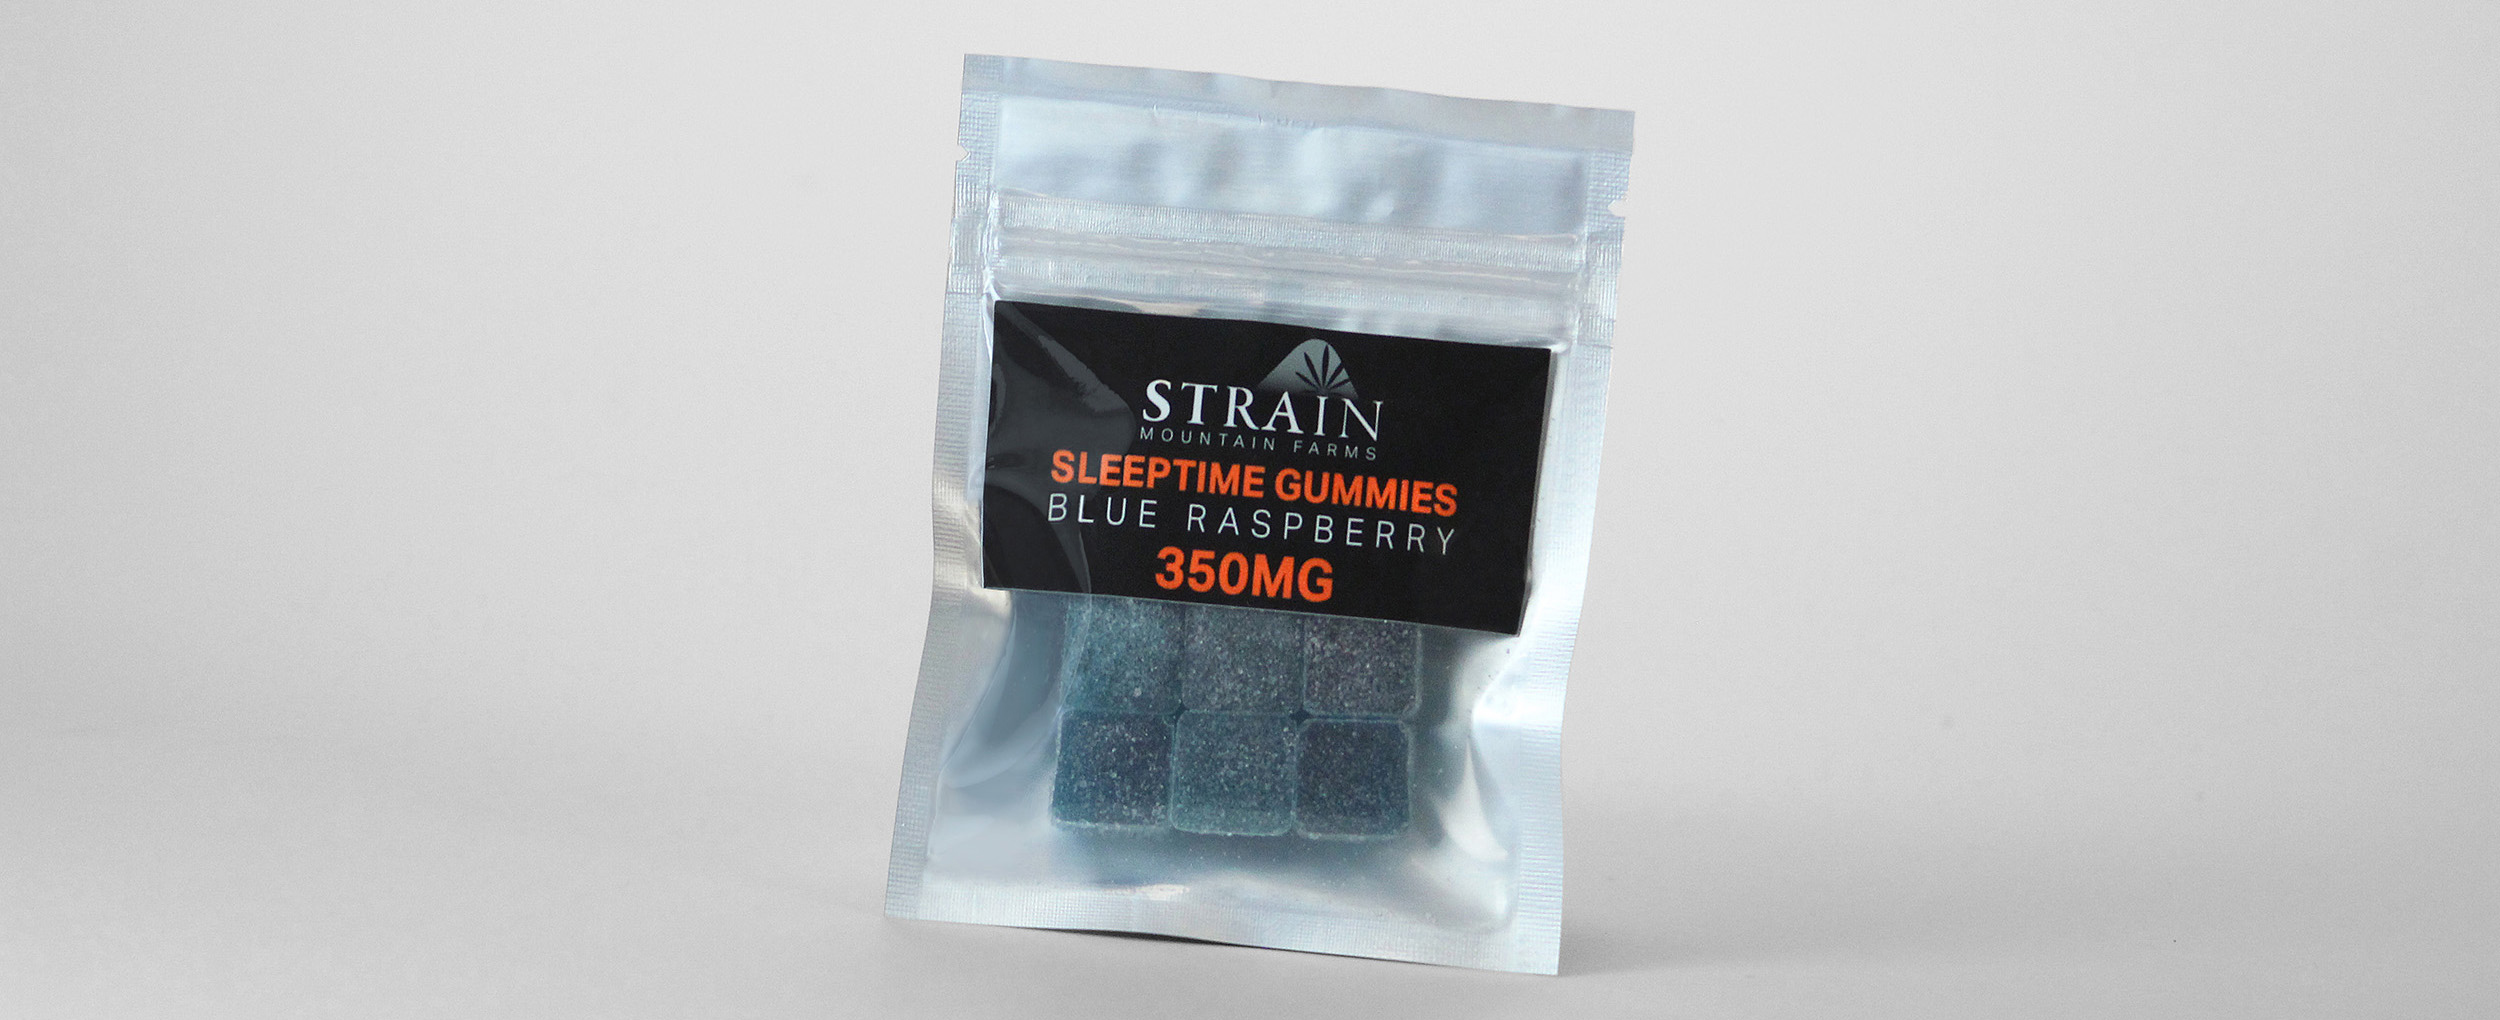 Strain Mountian Sleeptime Gummies Package Cropped